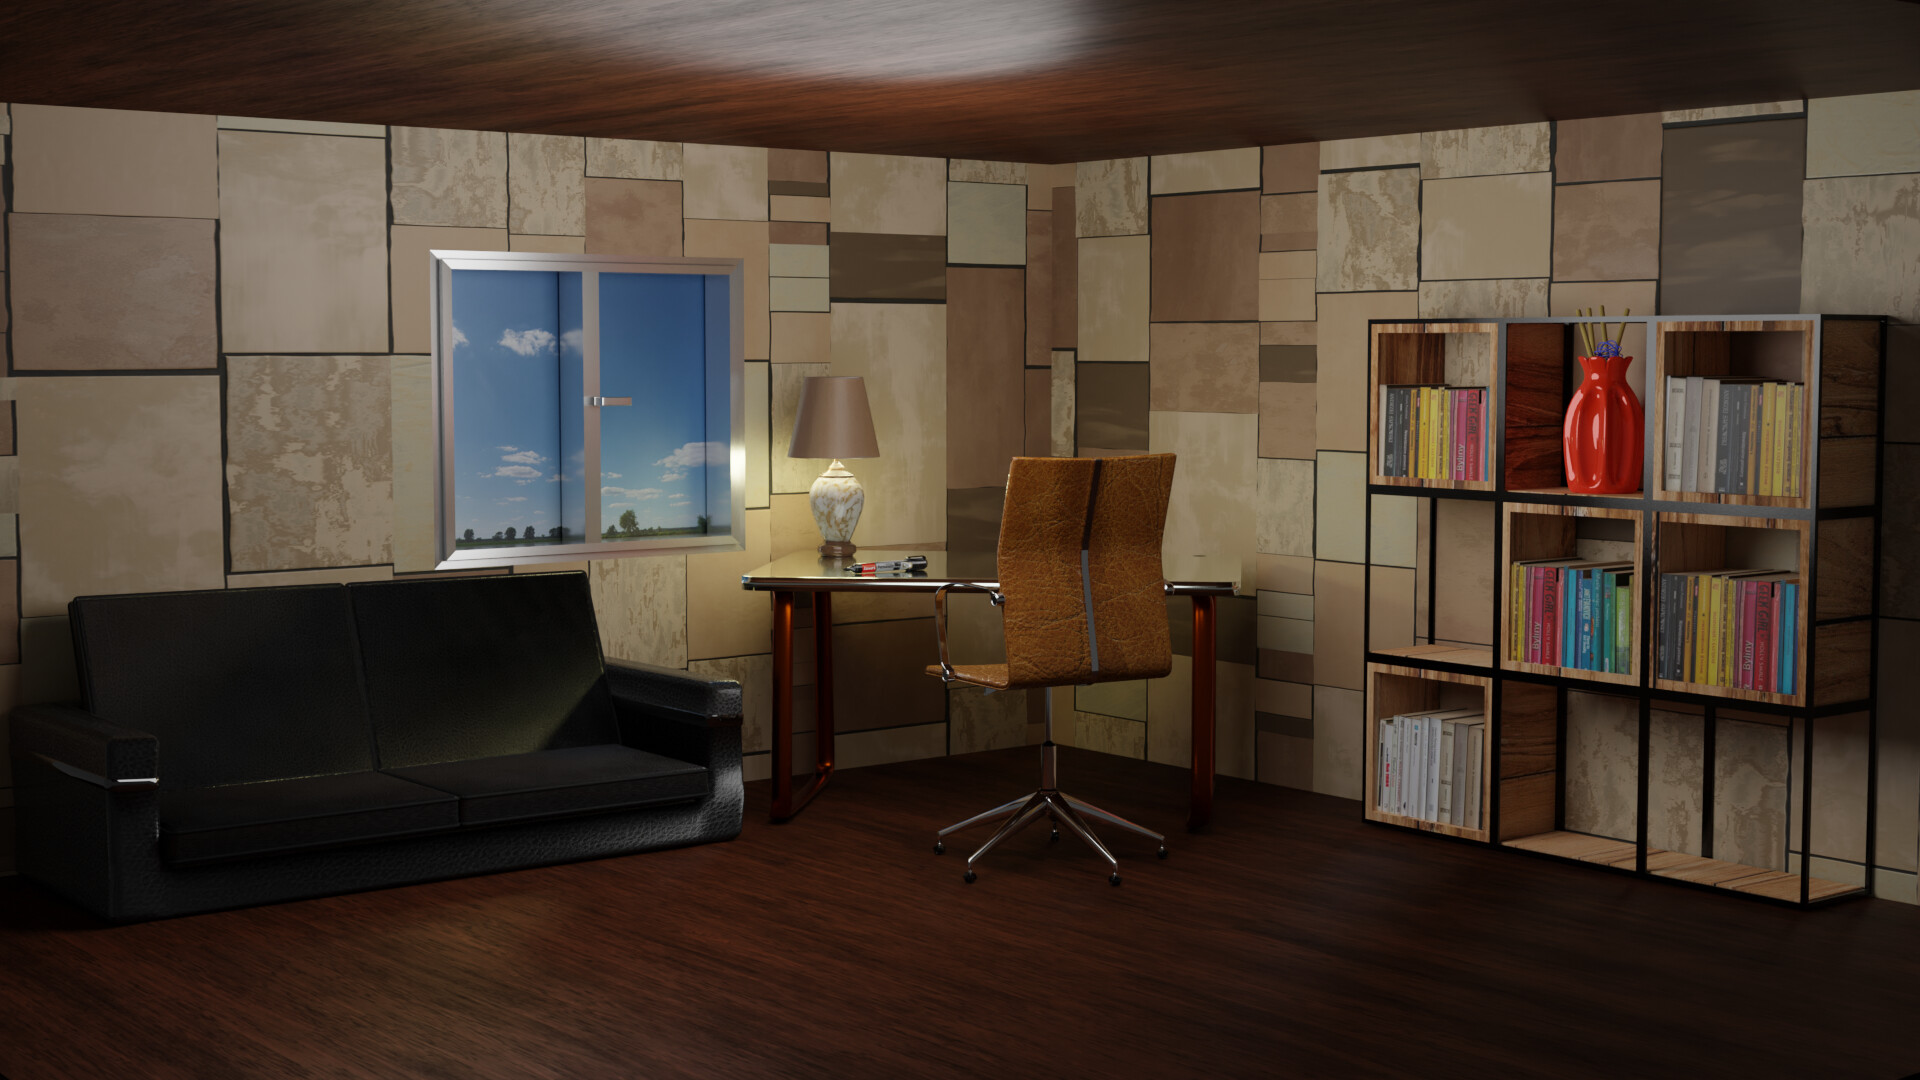 ArtStation - 3D Realistic Room Design